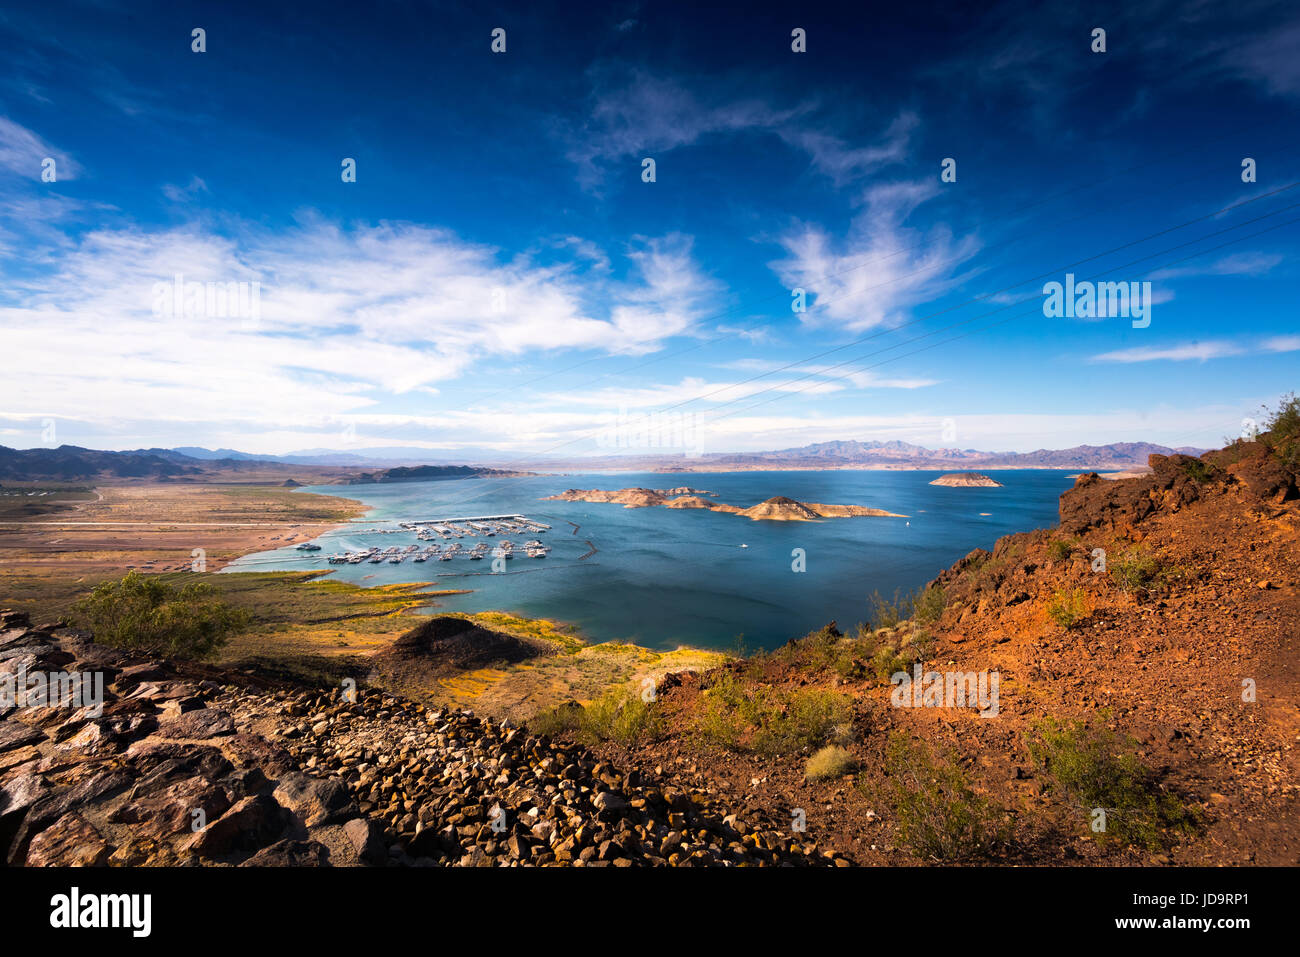 Mountain scene with lake with rocky terrain and horizon, Nevada, USA. Stock Photo